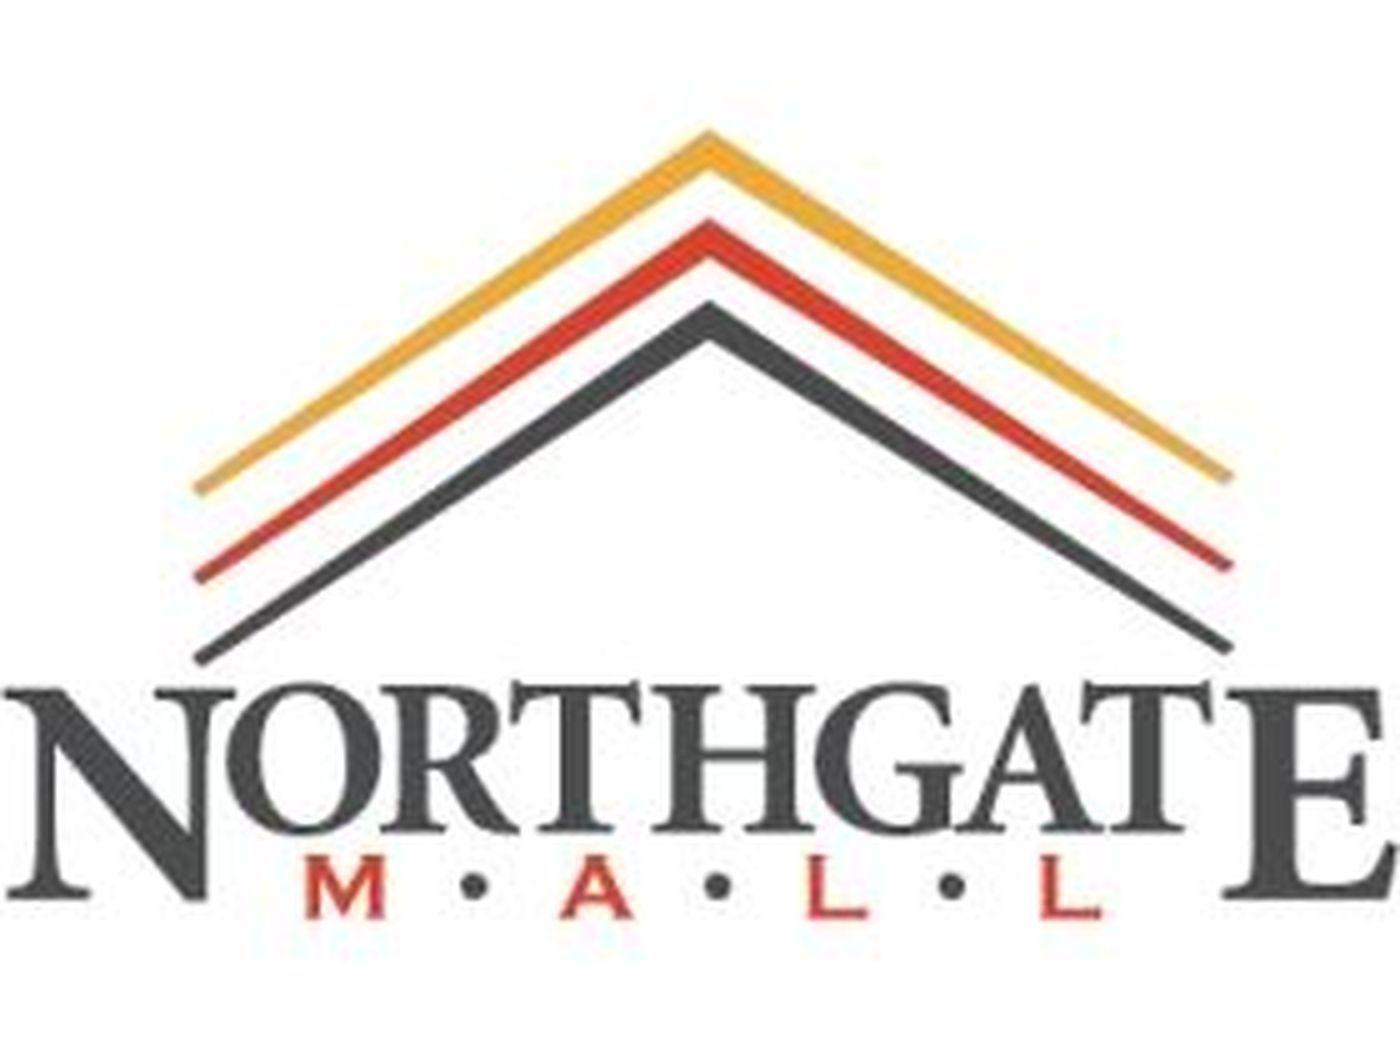 Northgate Logo - Northgate Mall | Logopedia | FANDOM powered by Wikia